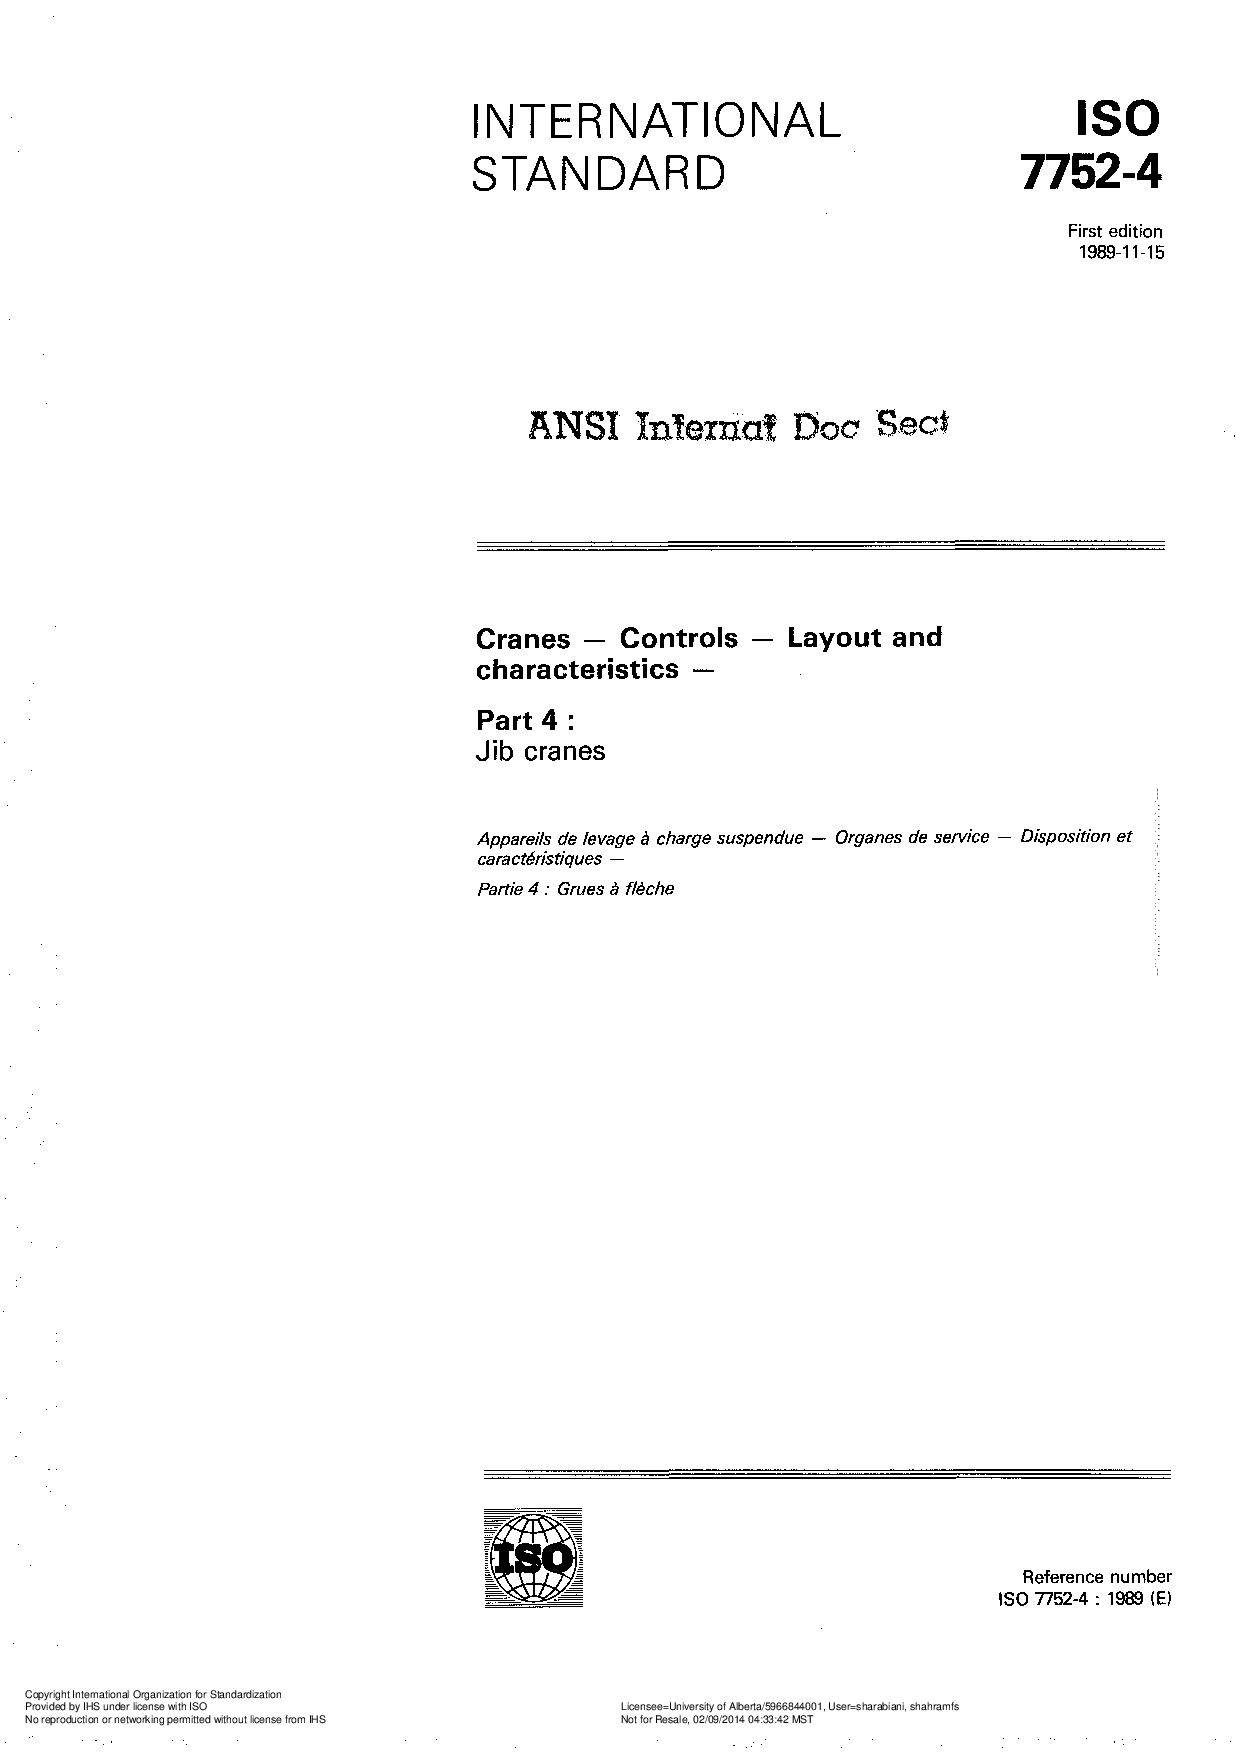 ISO 7752-4:1989封面图